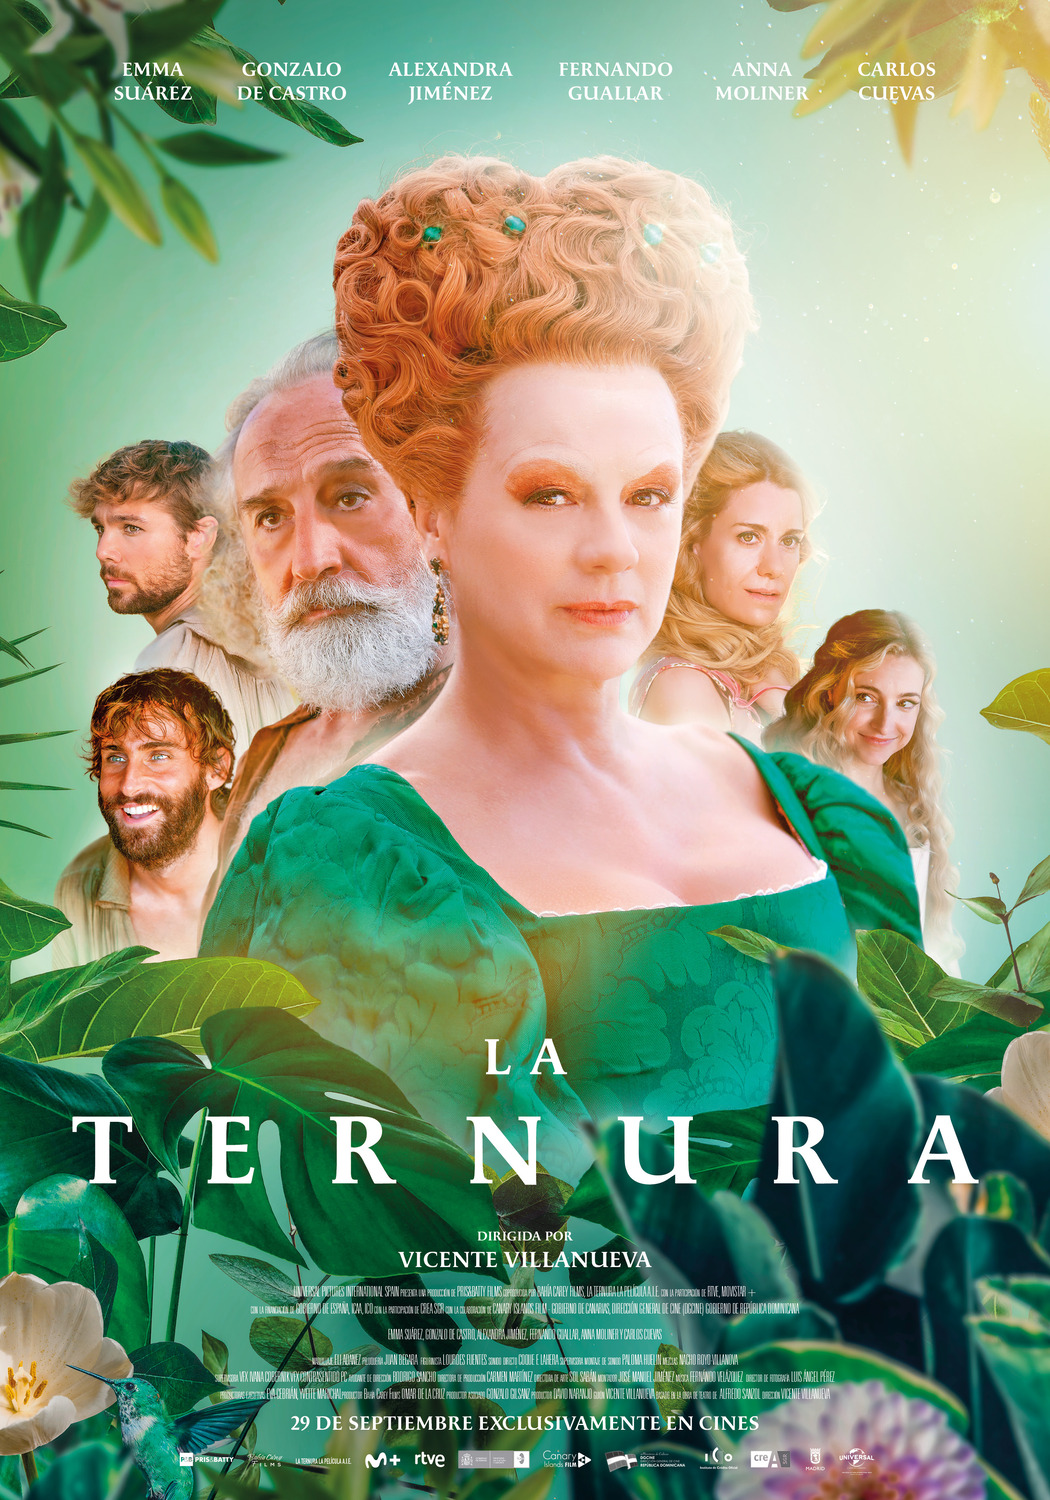 Extra Large Movie Poster Image for La Ternura 